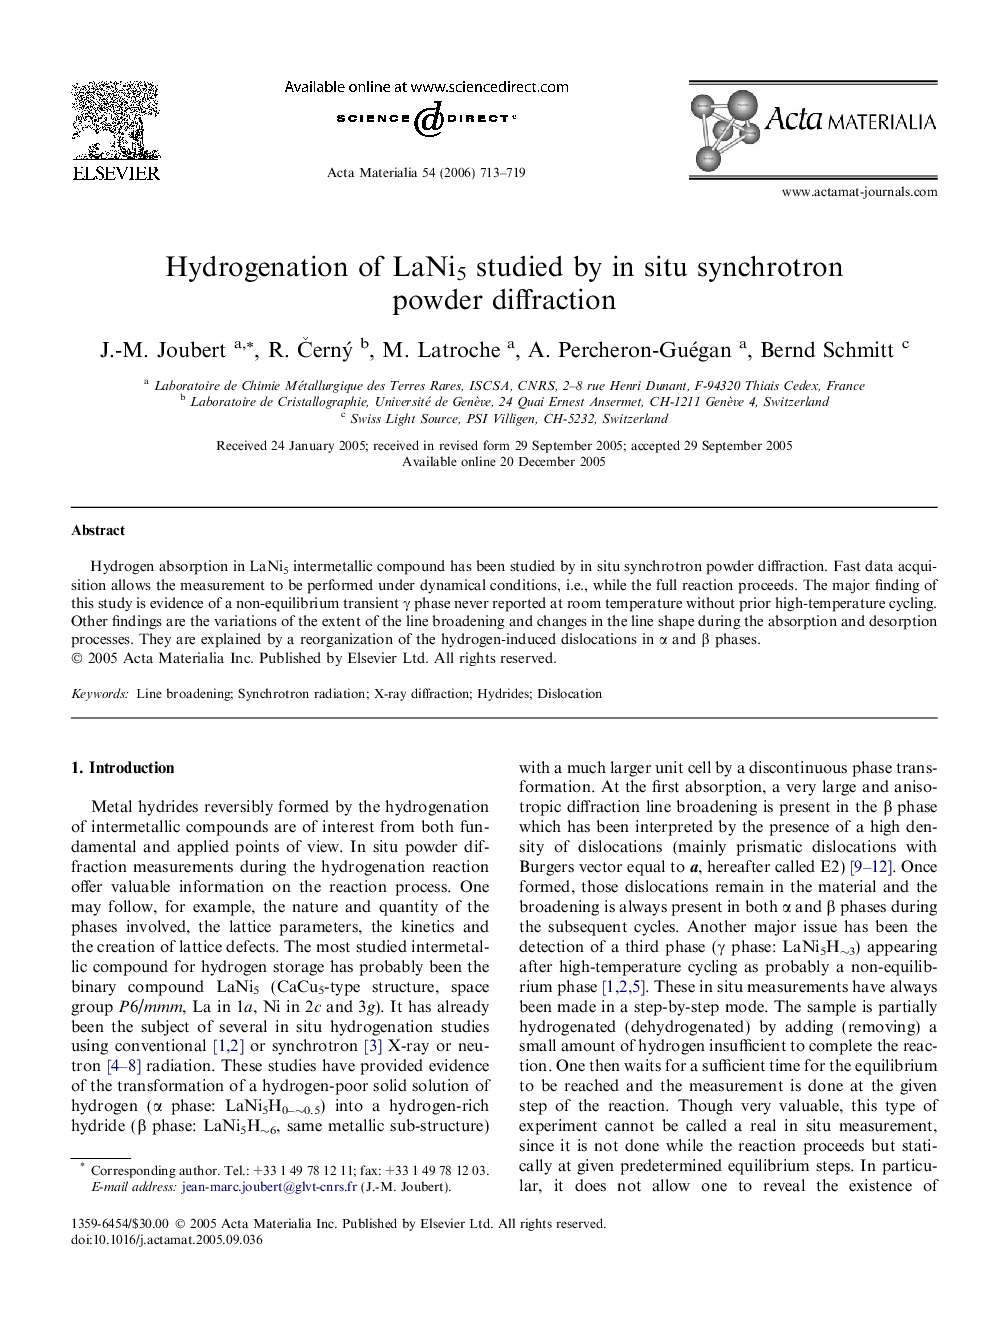 Hydrogenation of LaNi5 studied by in situ synchrotron powder diffraction